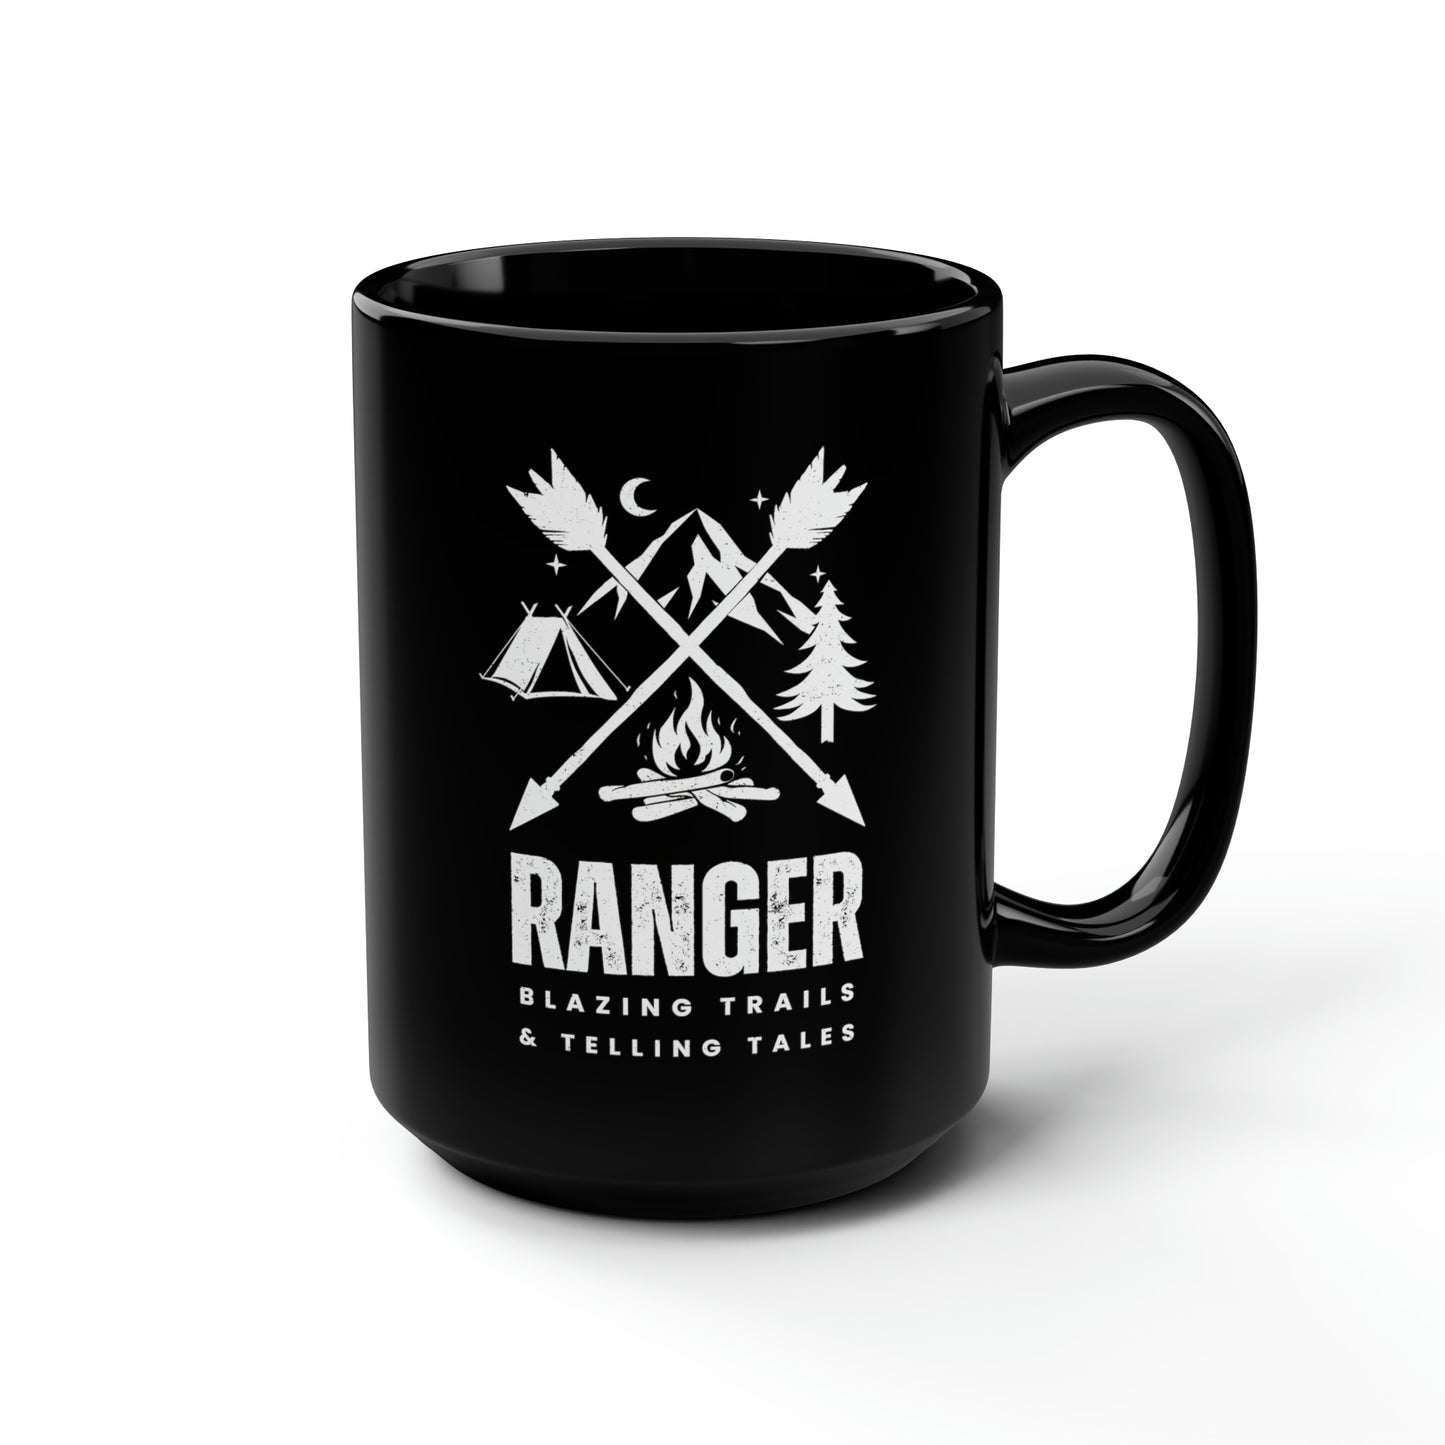 Ranger: Blazing Trails and Telling Tales - Large Black Mug, 15 oz